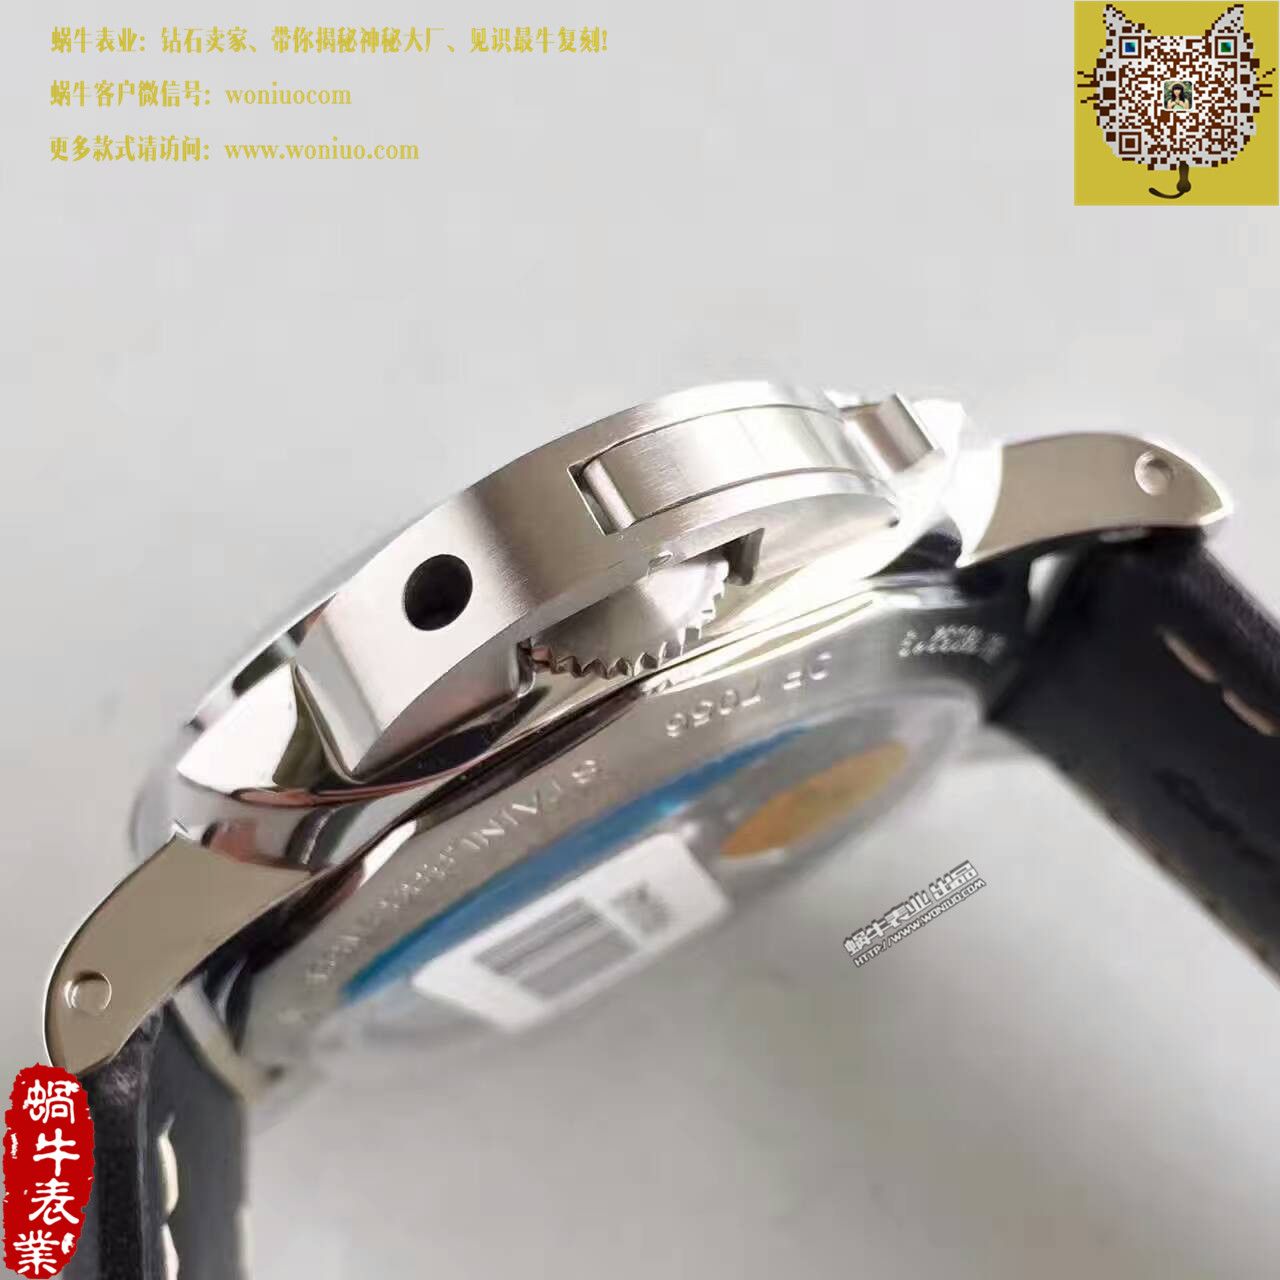 【ZF厂1:1超A高仿手表】沛纳海LUMINOR 1950系列PAM01359腕表 / PA003